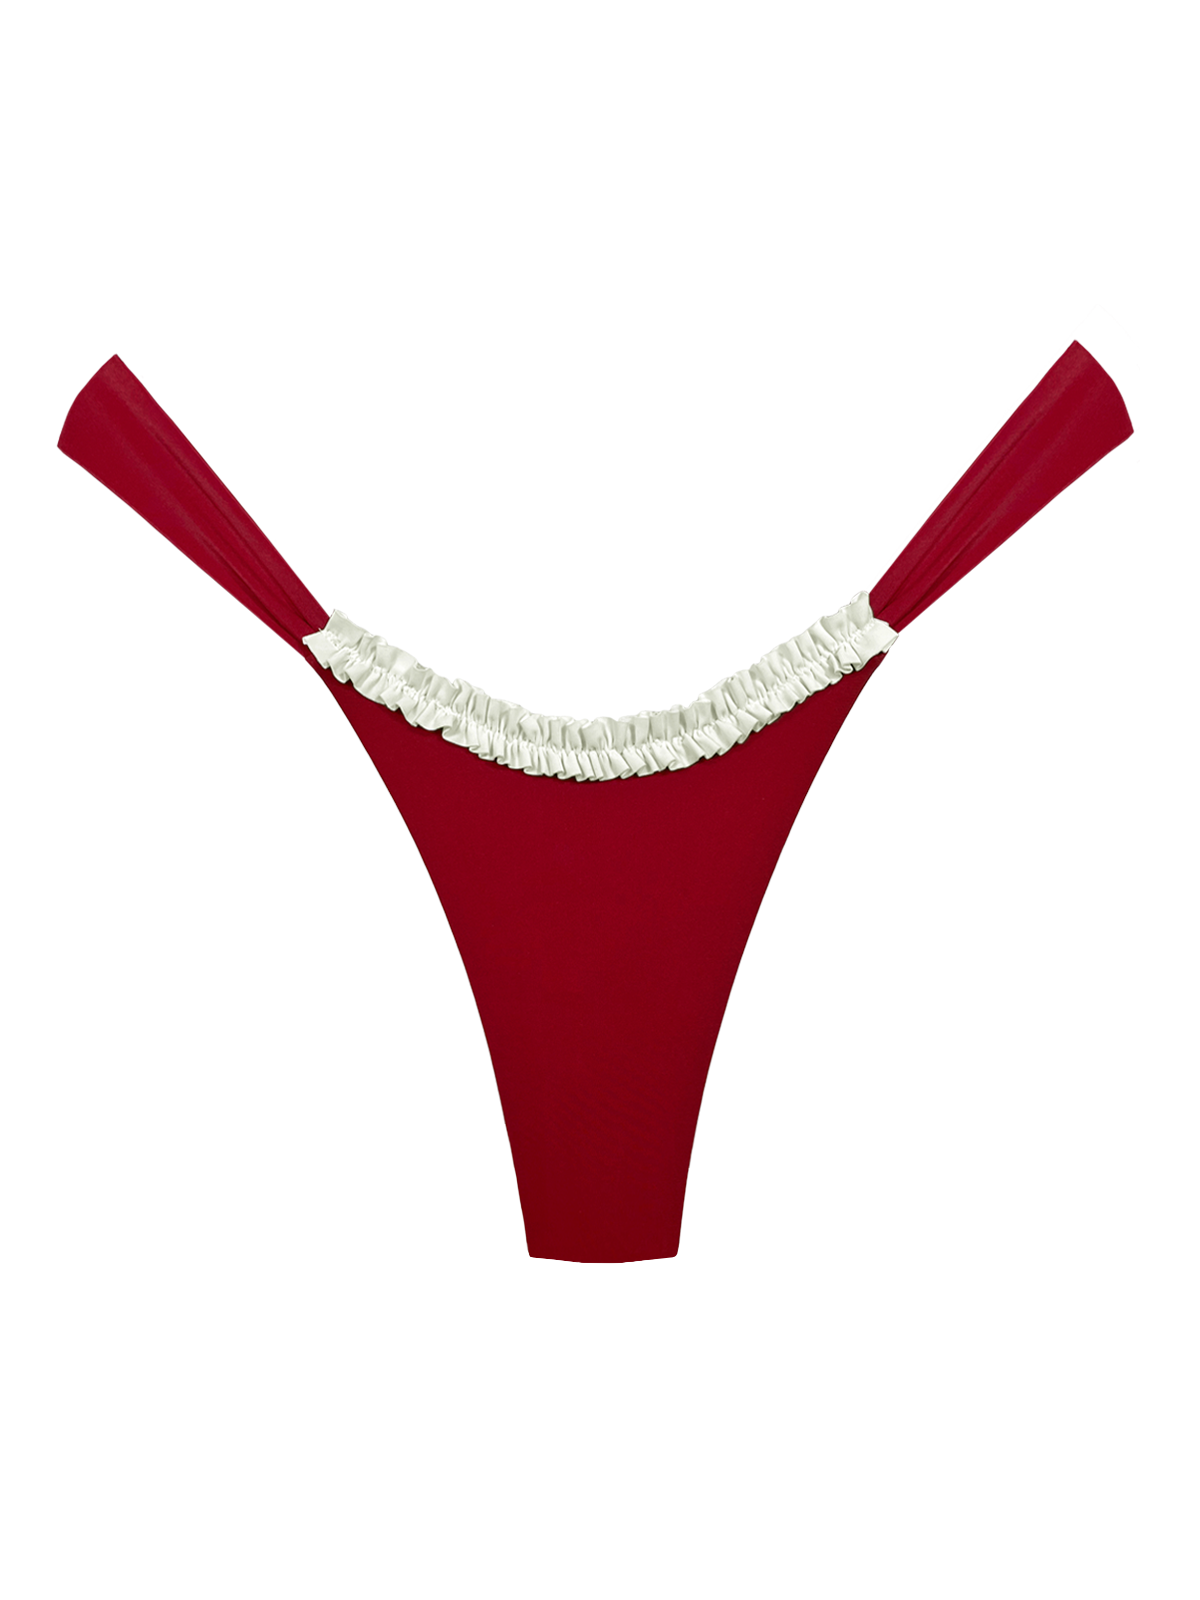 GB Intimates Red Brazilian Tanga Style Underwear. V Cut Cheeky